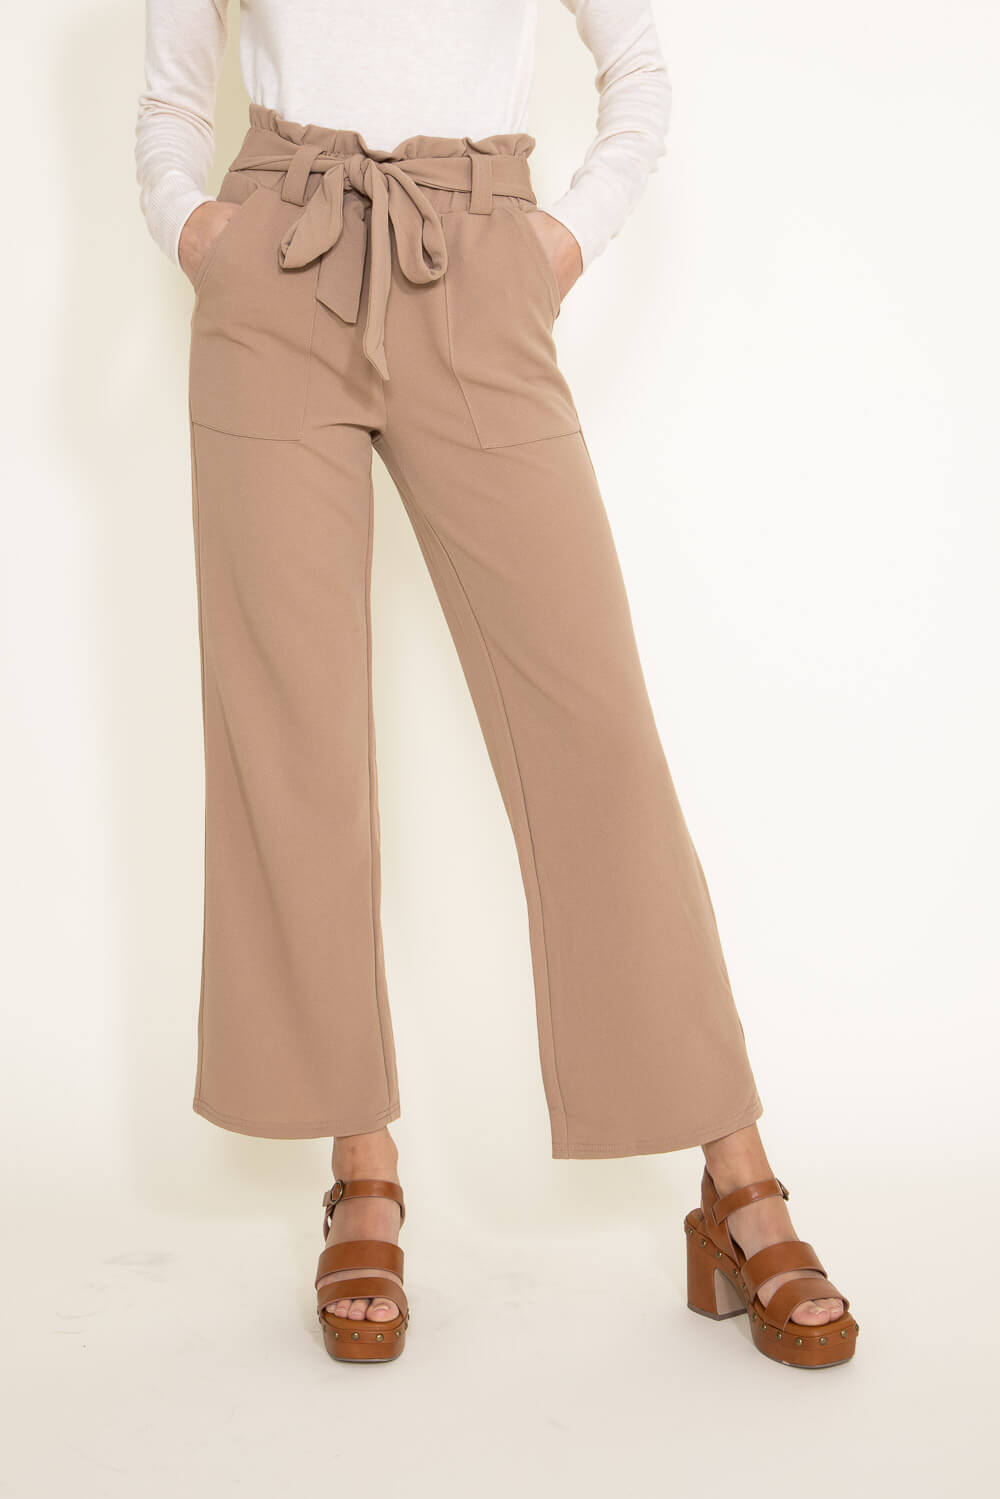 Buy Beige Trousers & Pants for Women by Sugathari Online | Ajio.com